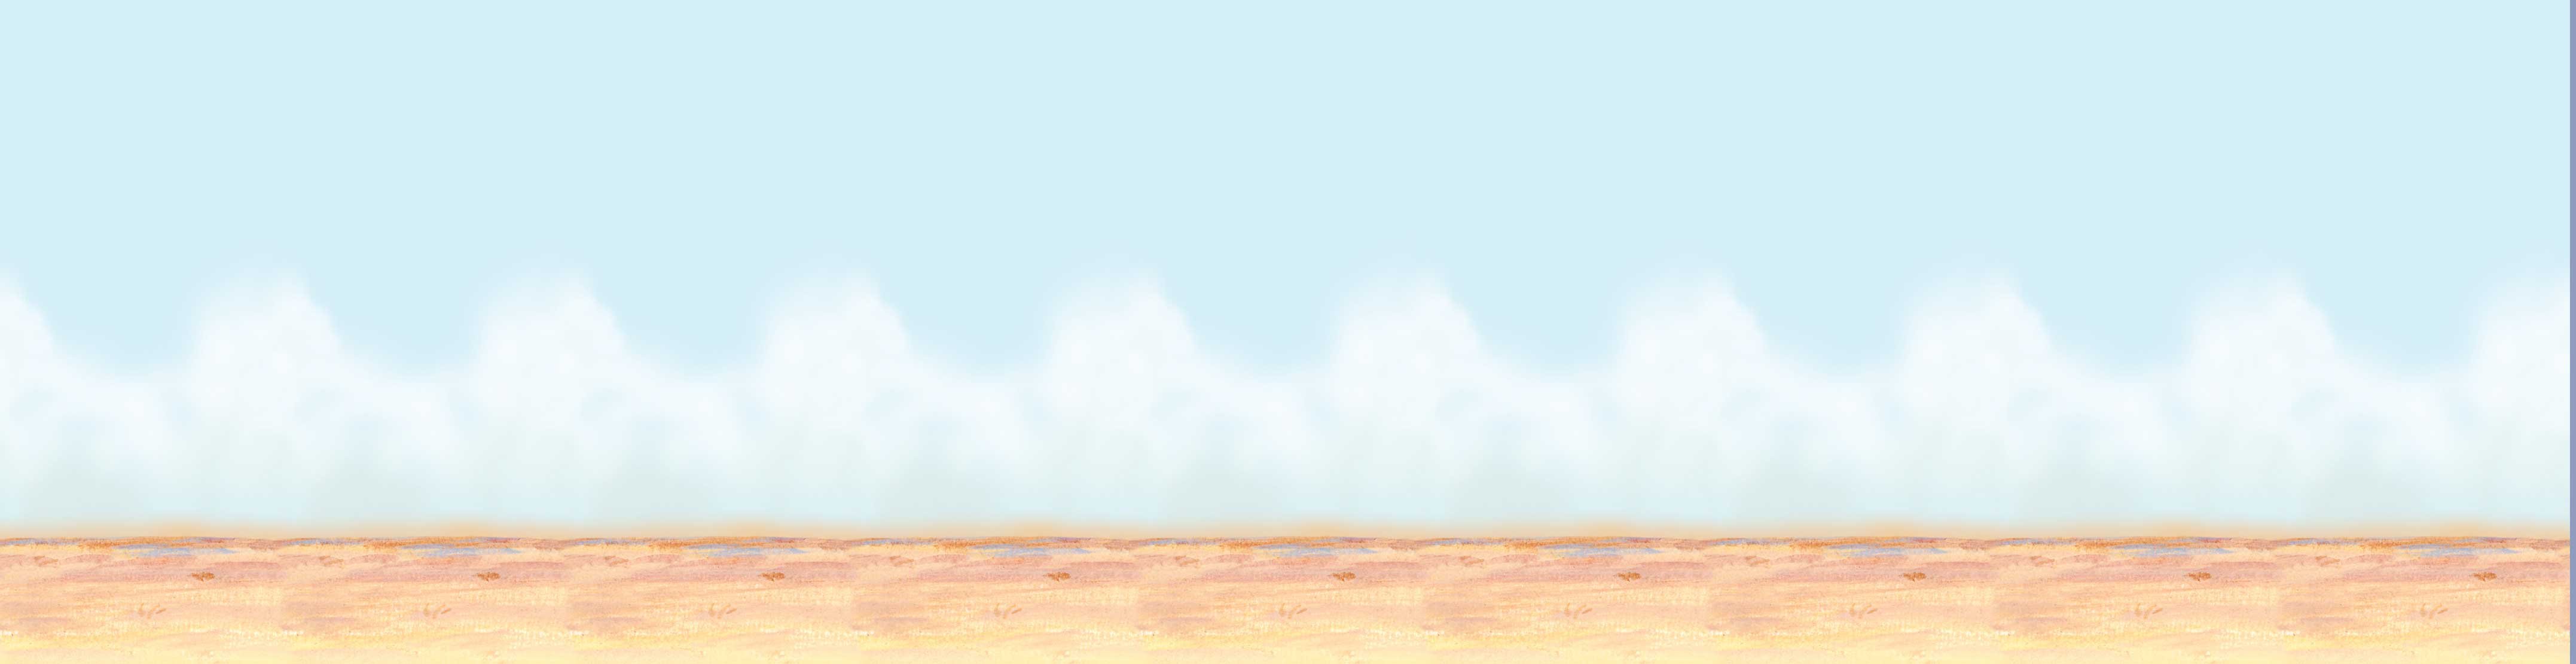 30' Desert Sky and Sand Backdrop